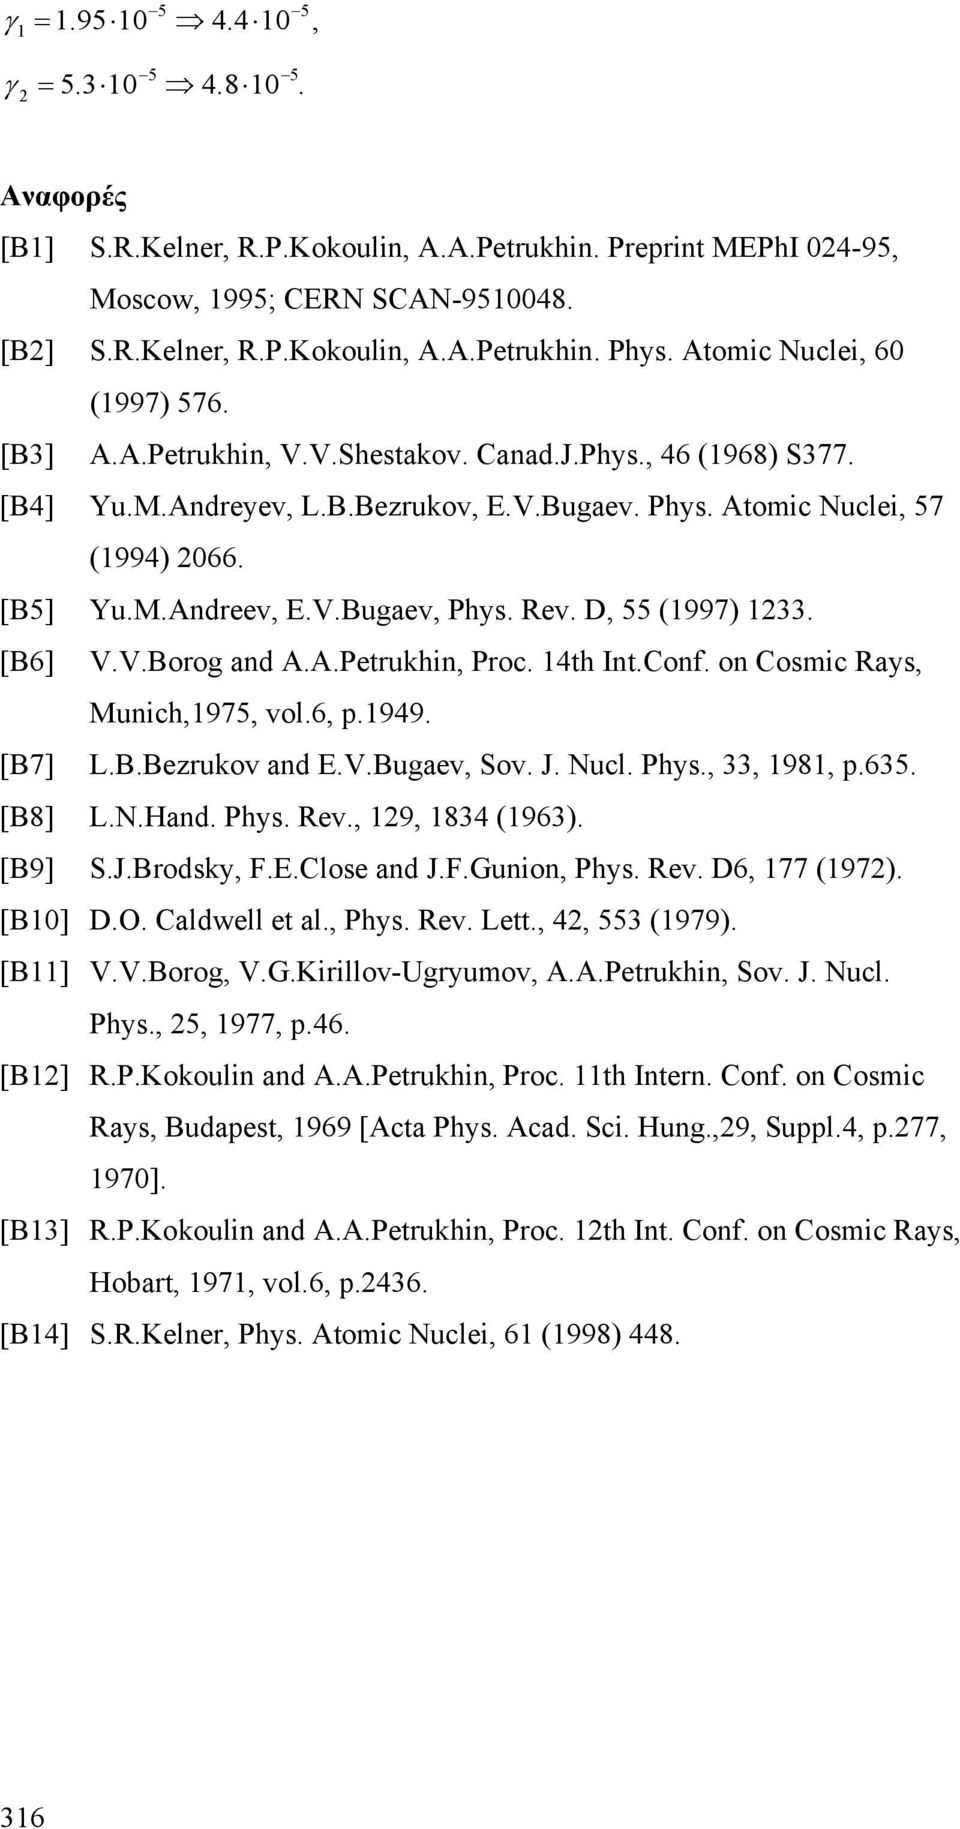 Rv. D, 55 (1997) 133. [Β6] V.V.Borog and A.A.Ptrukhin, Proc. 14th Int.Conf. on Cosmic Rays, Munich,1975, vol.6, p.1949. [Β7] L.B.Bzrukov and E.V.Bugav, Sov. J. Nucl. Phys., 33, 1981, p.635. [Β8] L.N.Hand.